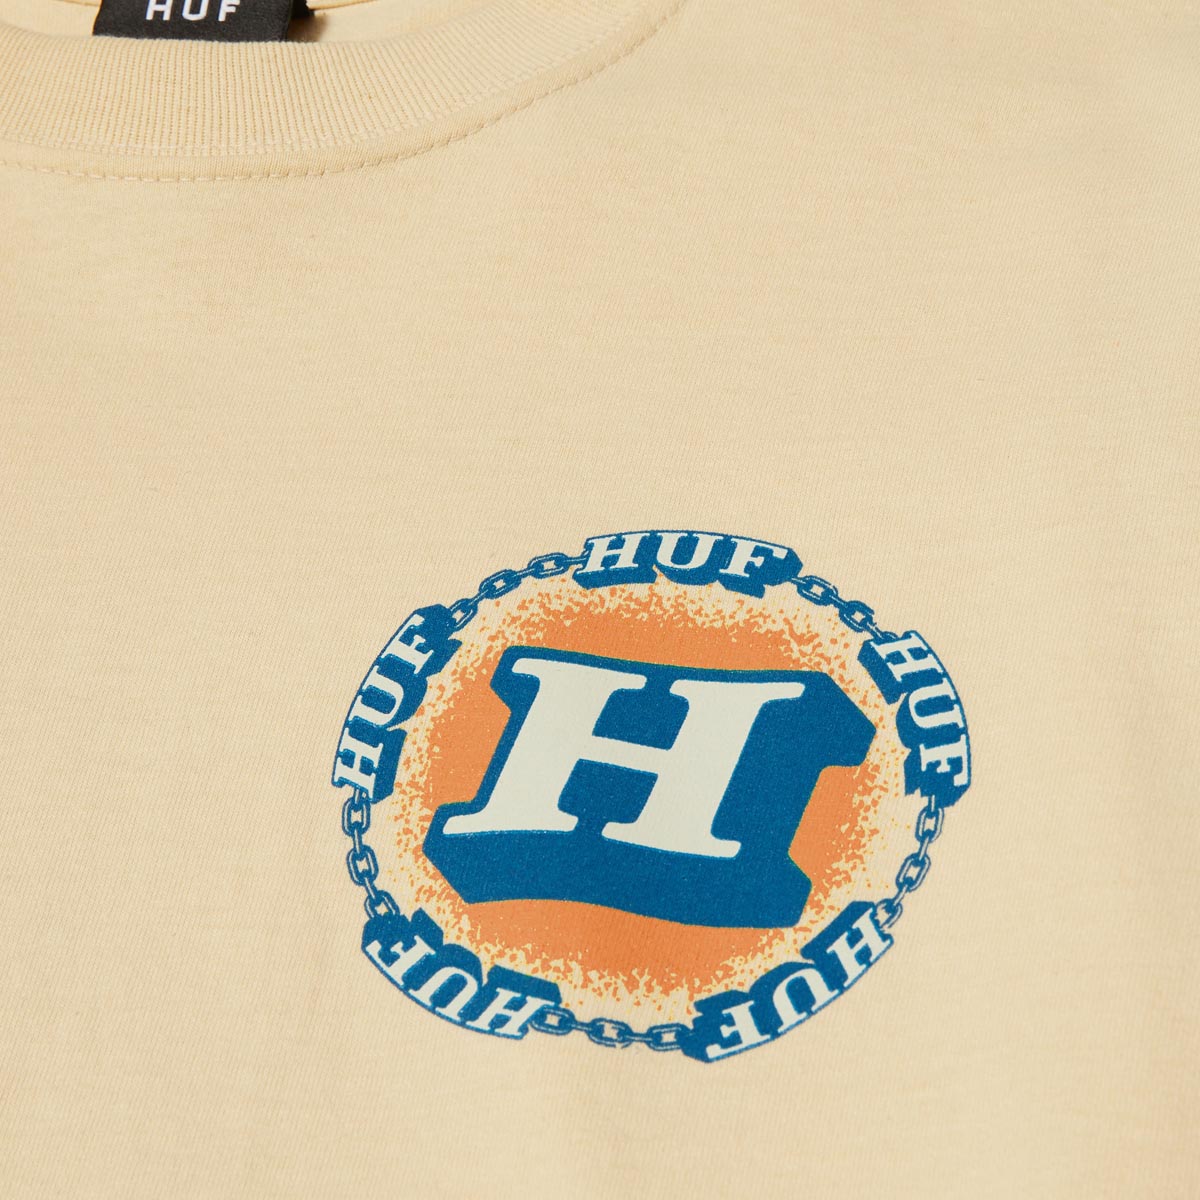 HUF Dependable Long Sleeve T-Shirt - Wheat image 3